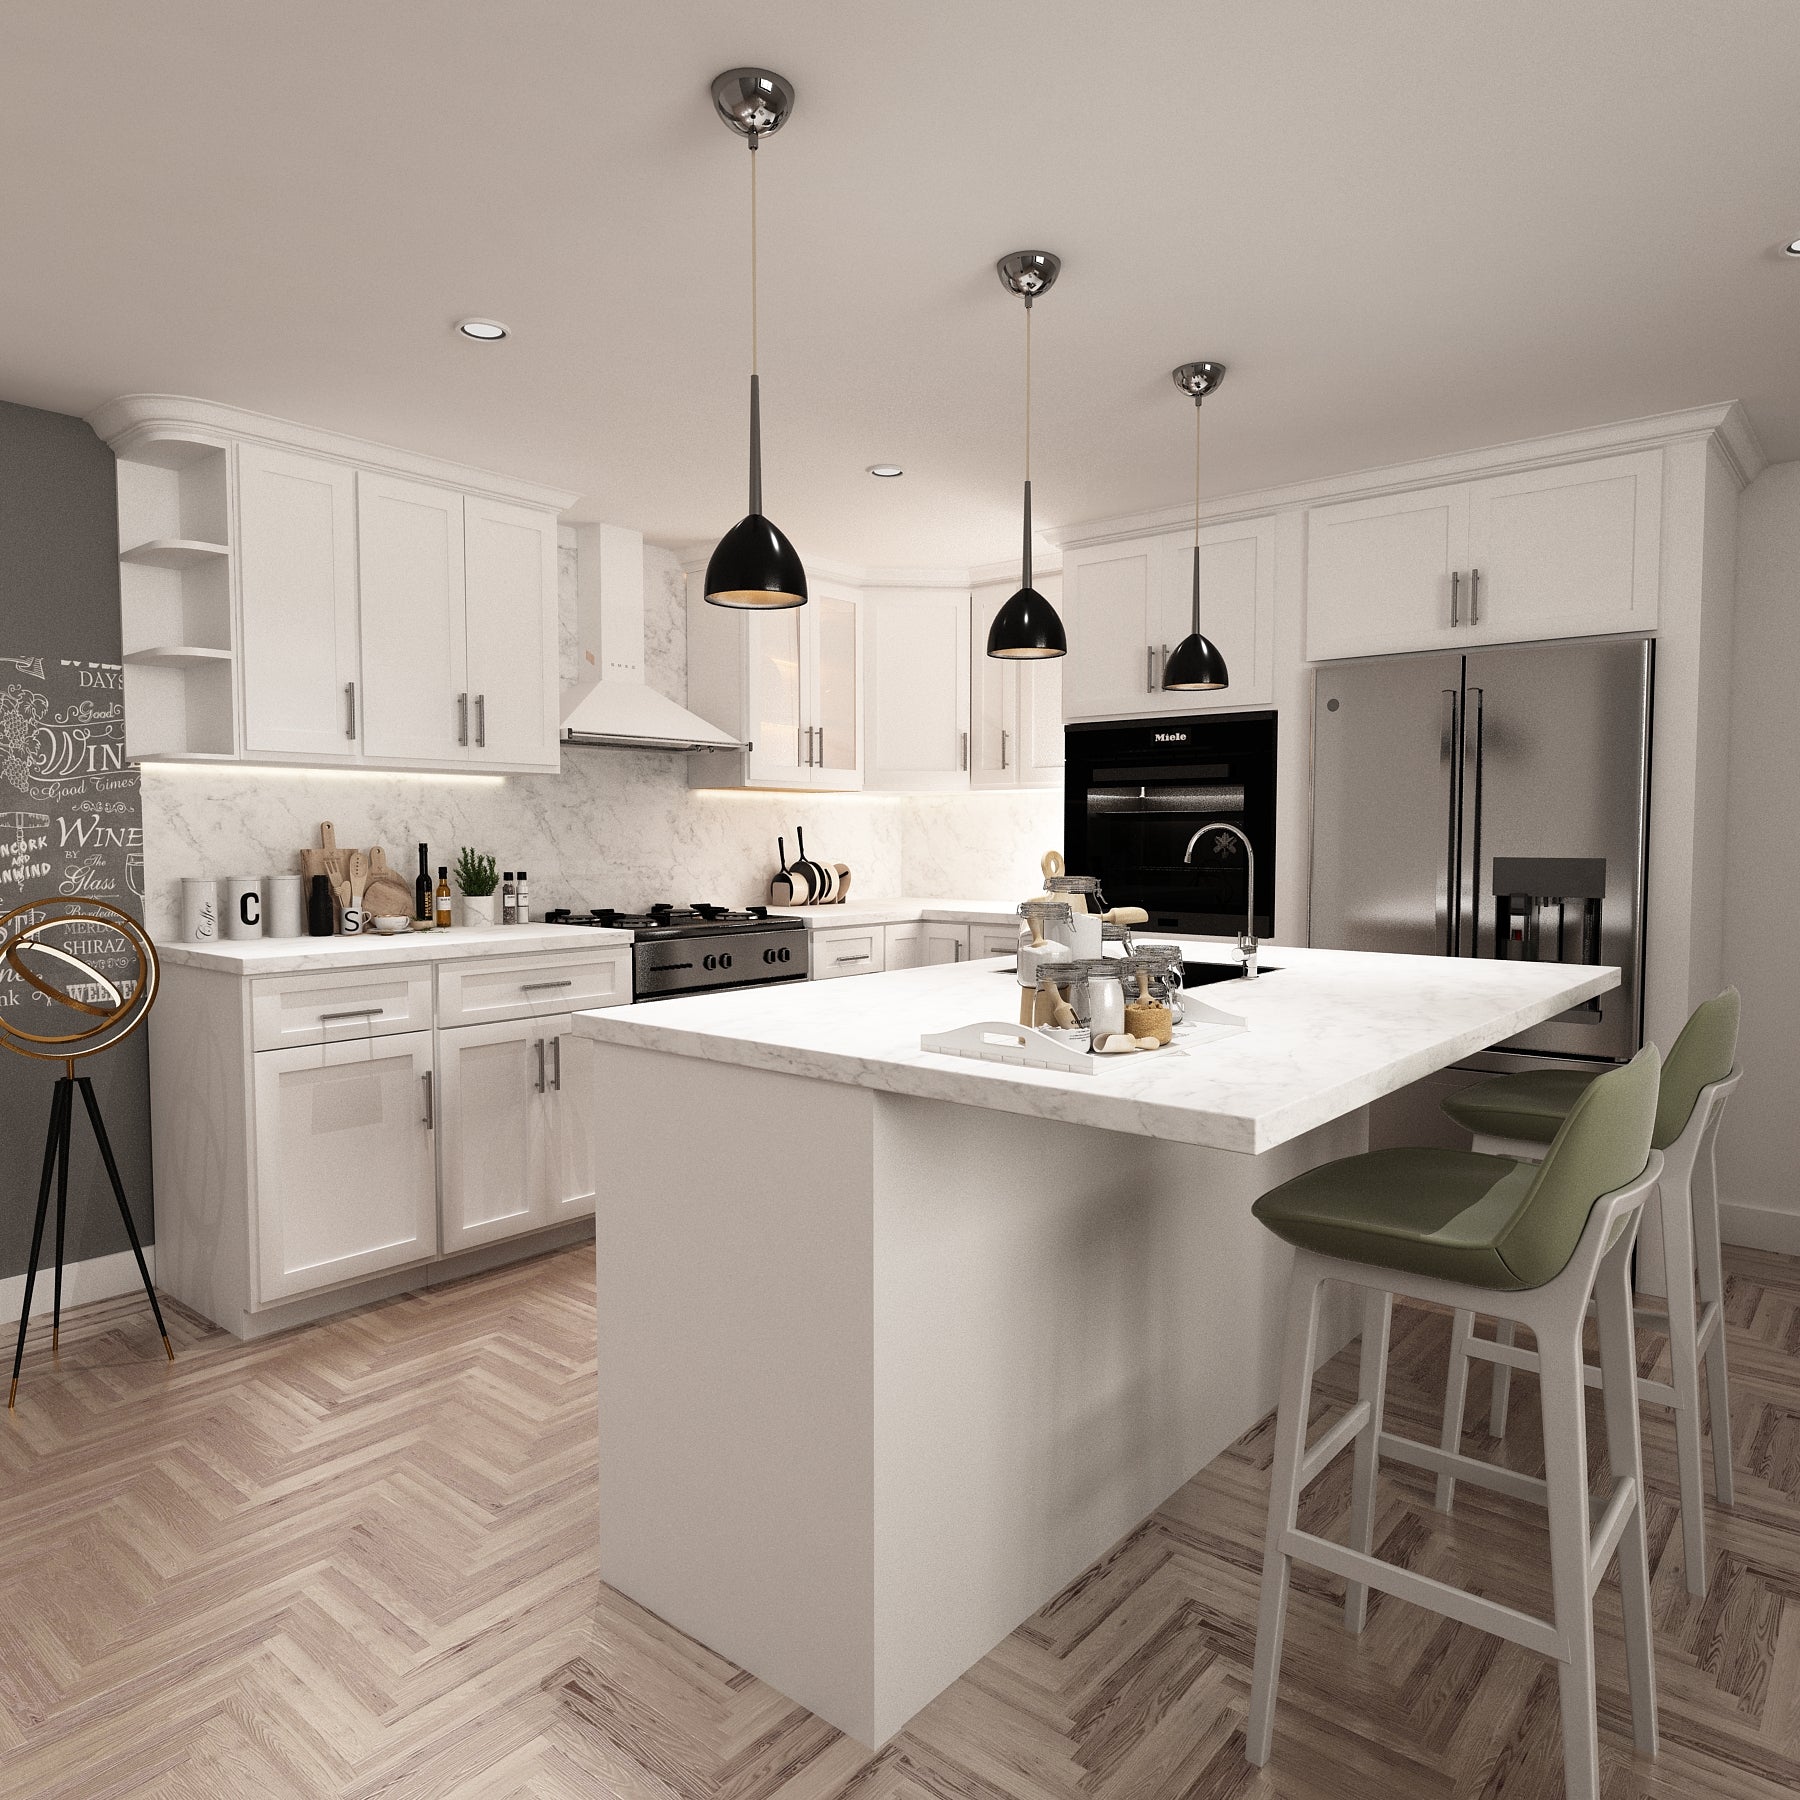 10x10 Kitchen Layout Design - Aria Shaker White Cabinets